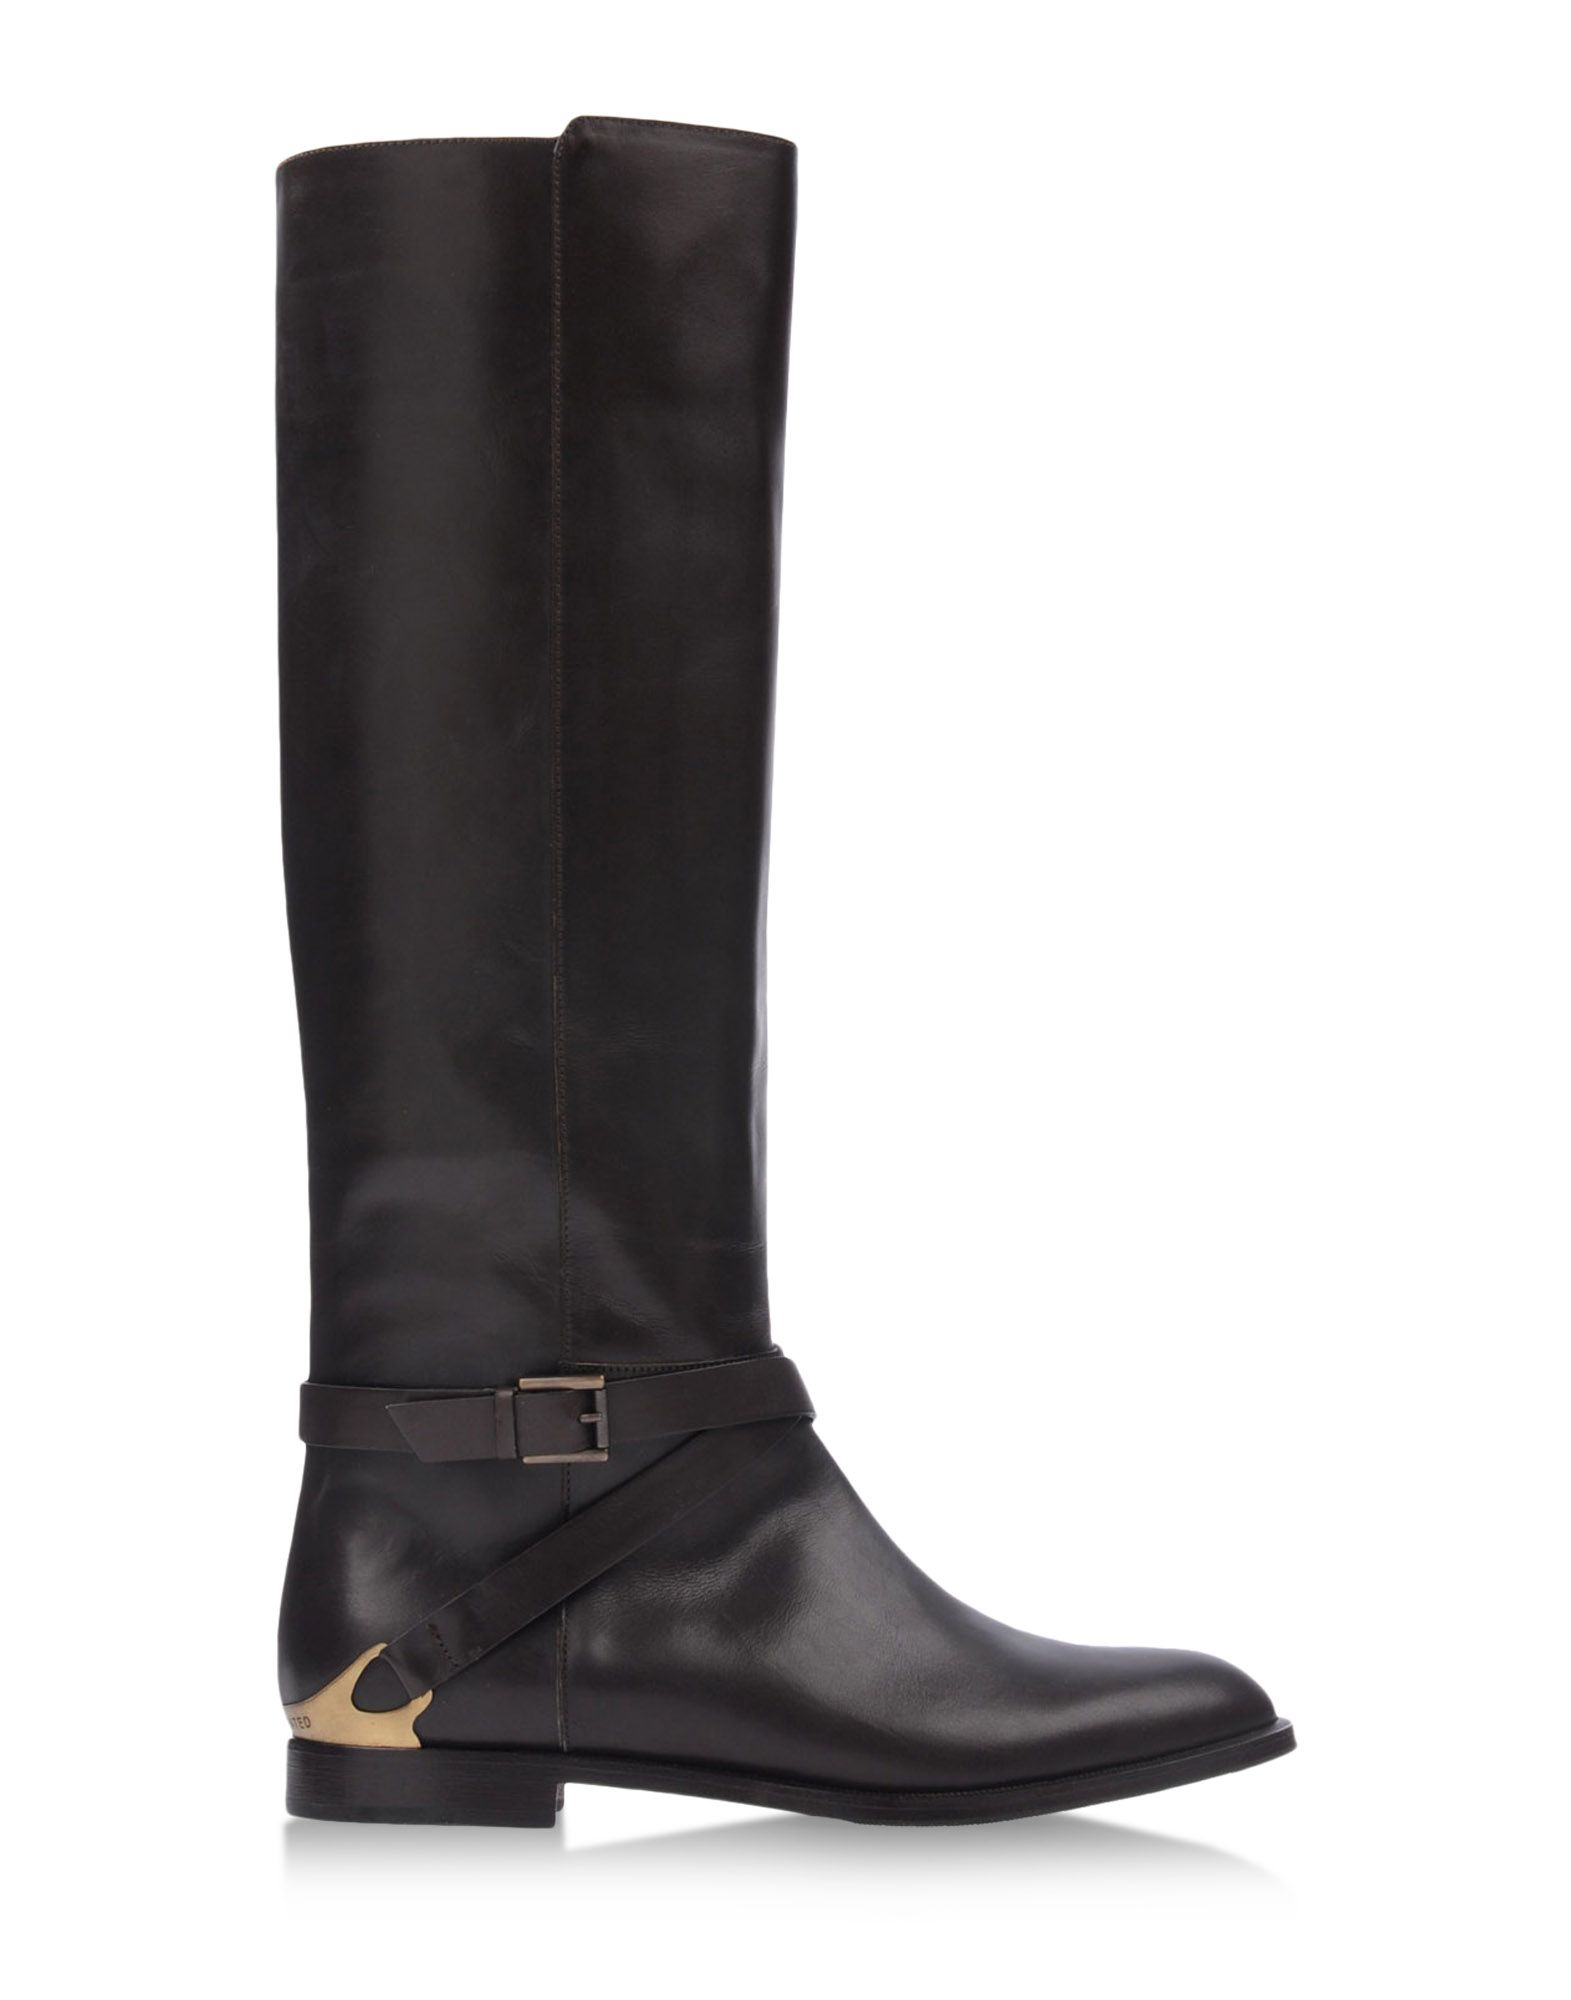 Fratelli Rossetti Tall Boots in Brown (Dark brown) | Lyst